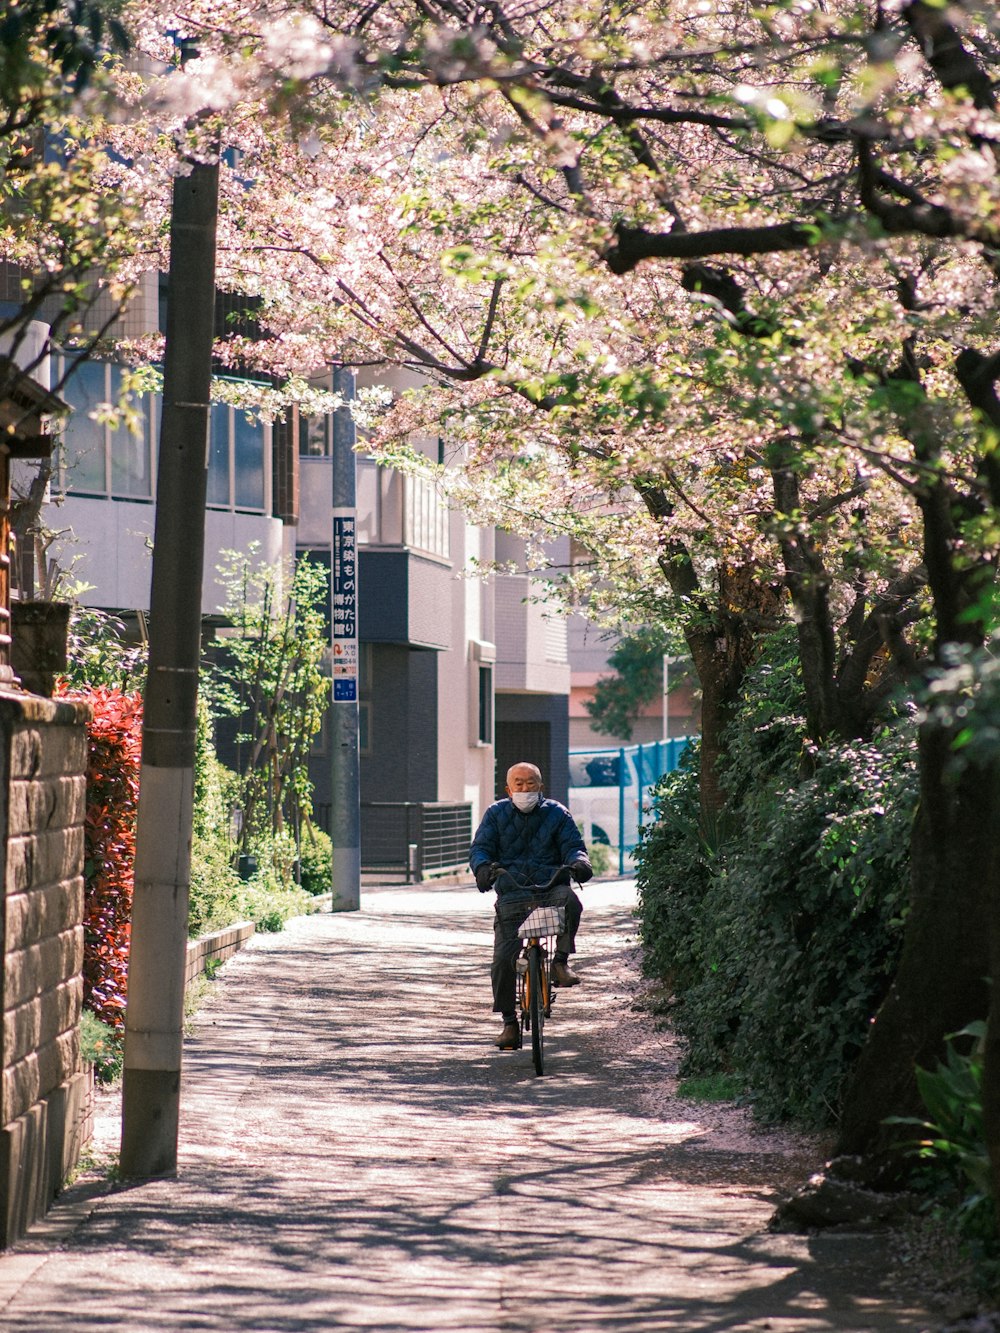 Un hombre montando en bicicleta por una calle bordeada de árboles